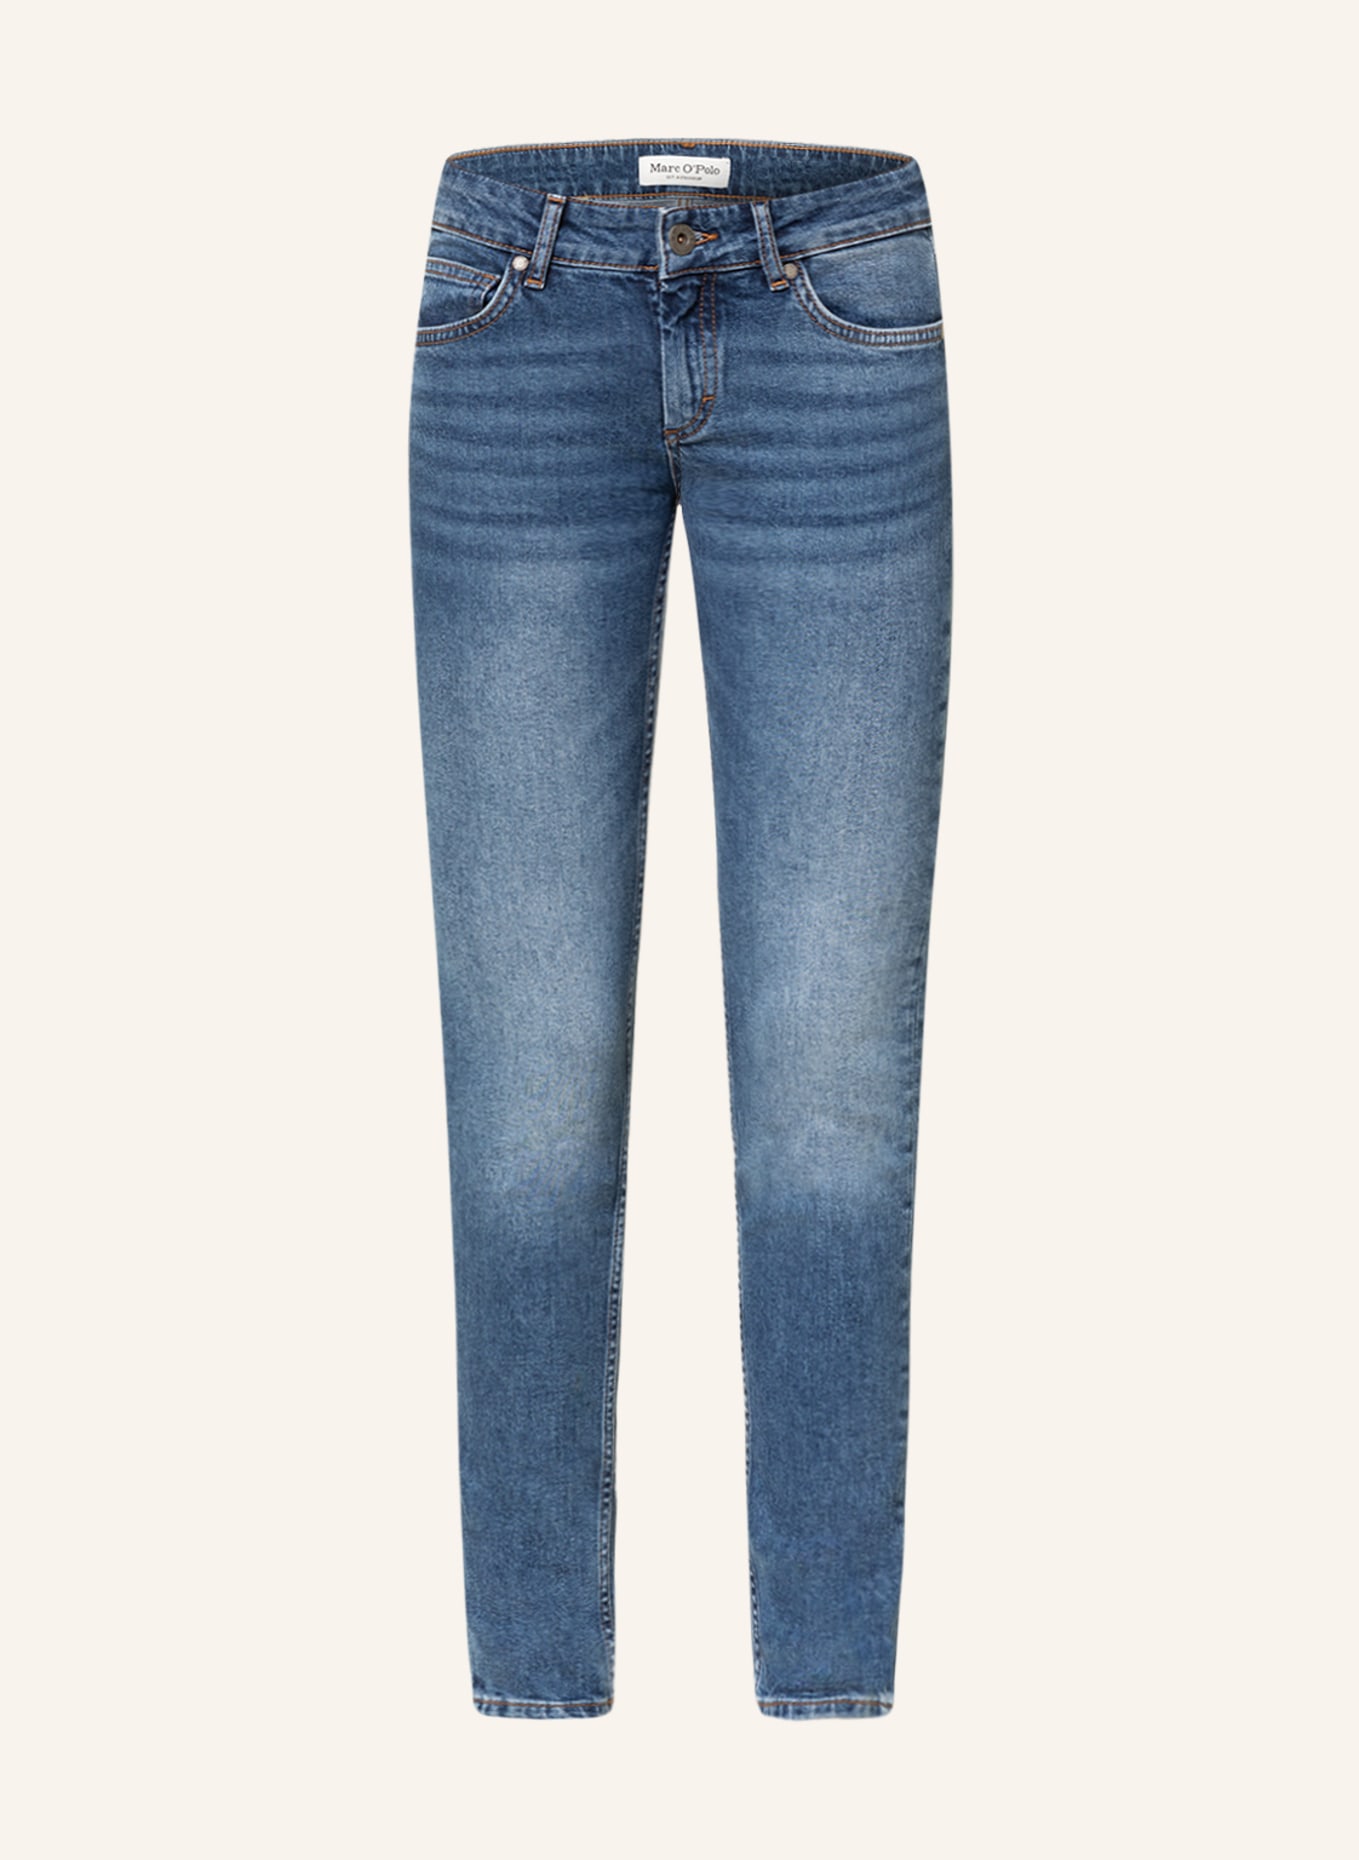 Marc O'Polo Skinny Jeans SKARA, Farbe: 004 sustainable dark blue salt and (Bild 1)